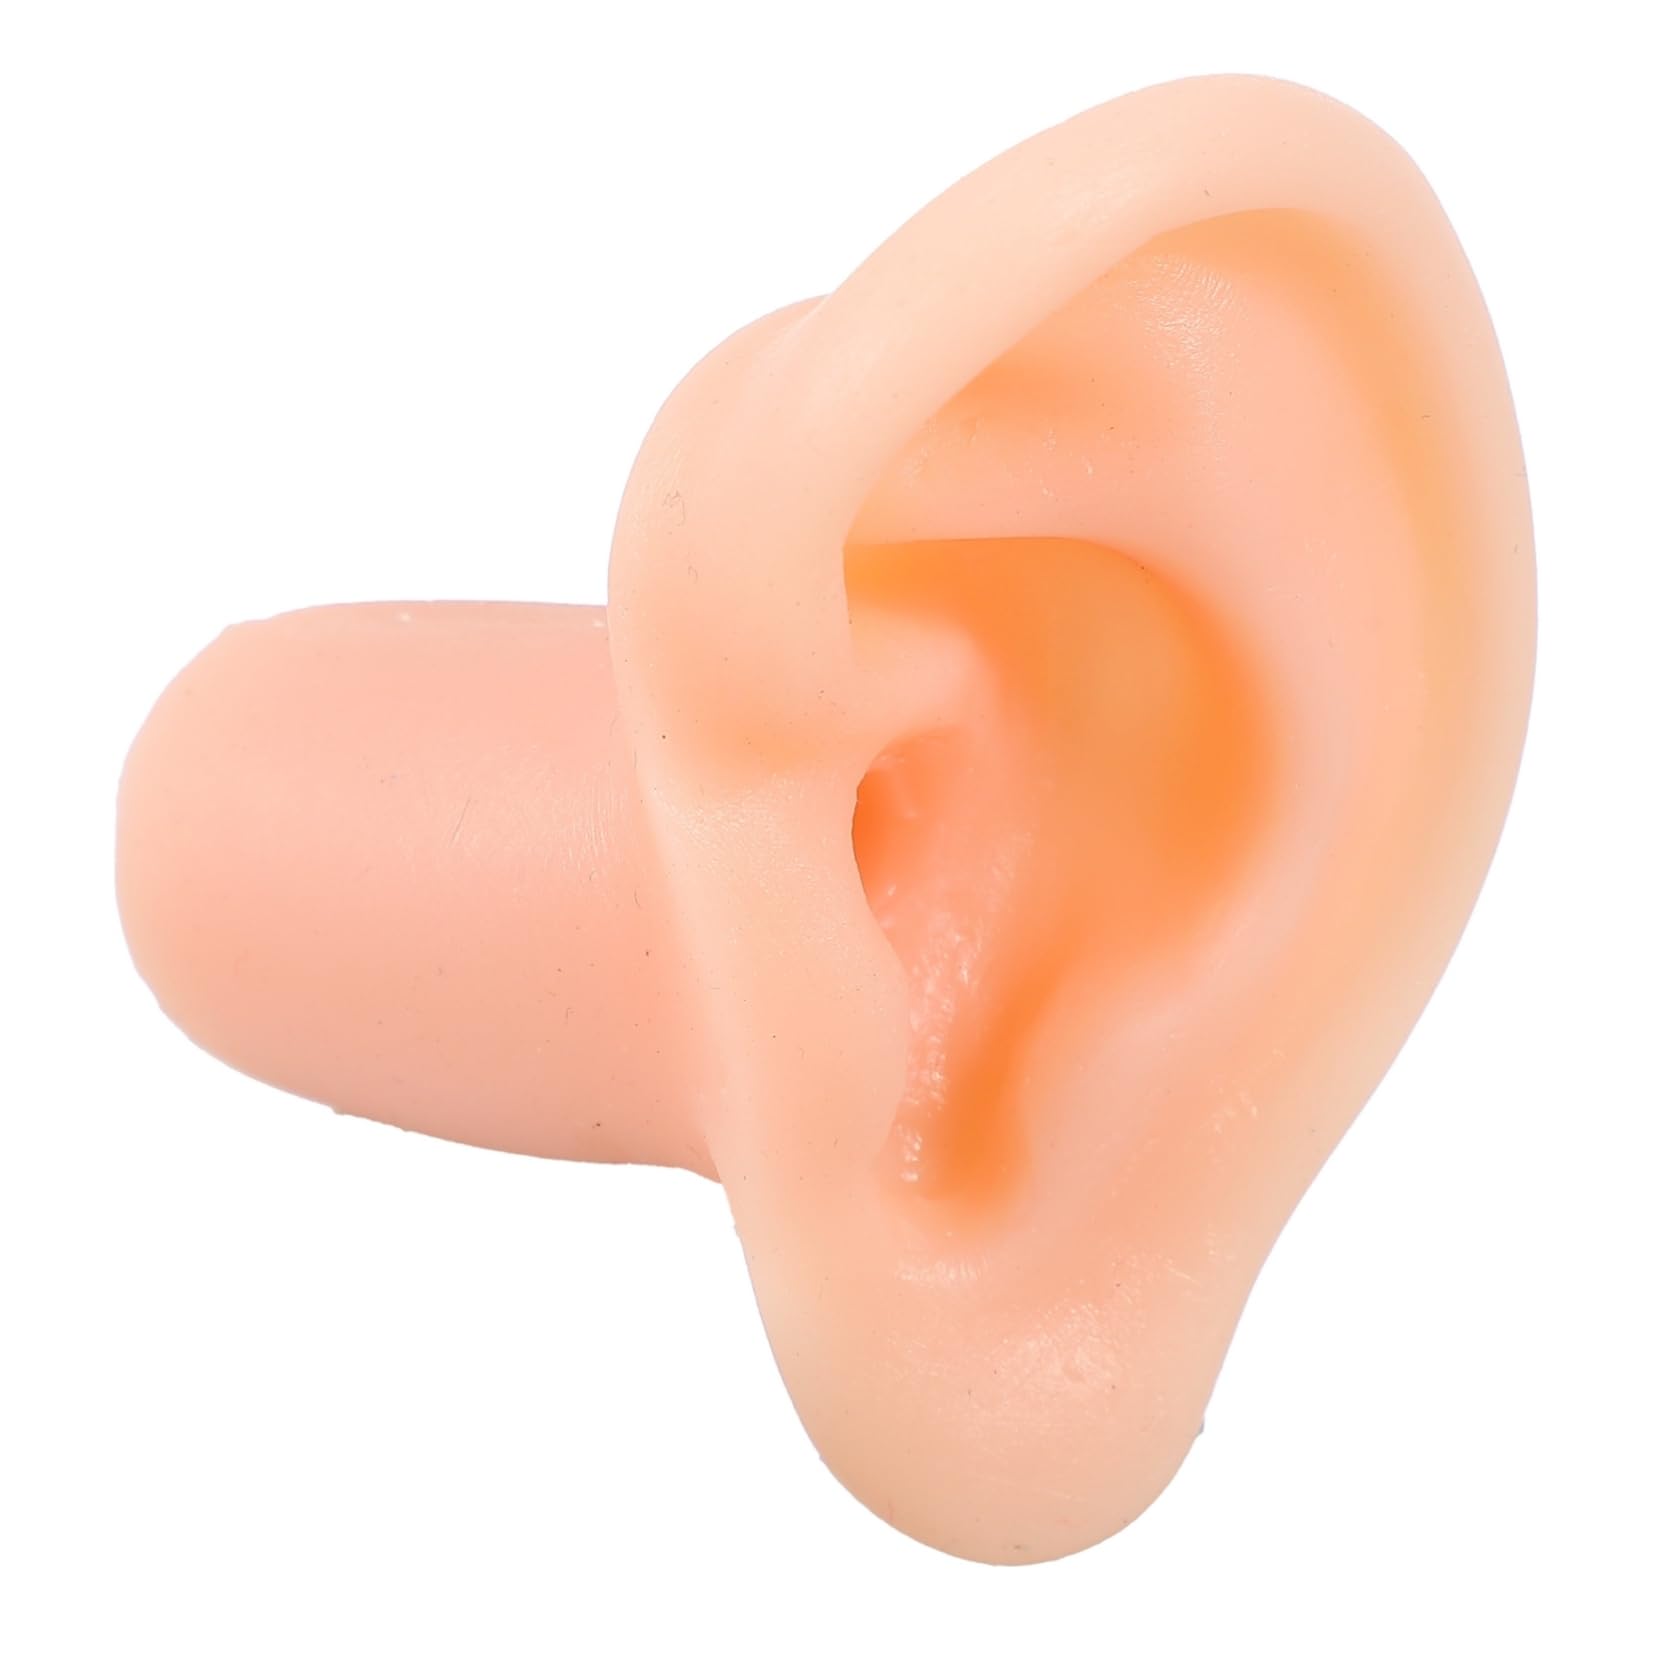 Baluue Ear Model Silicone Tunnels for Ears Silicone Earrings Ear